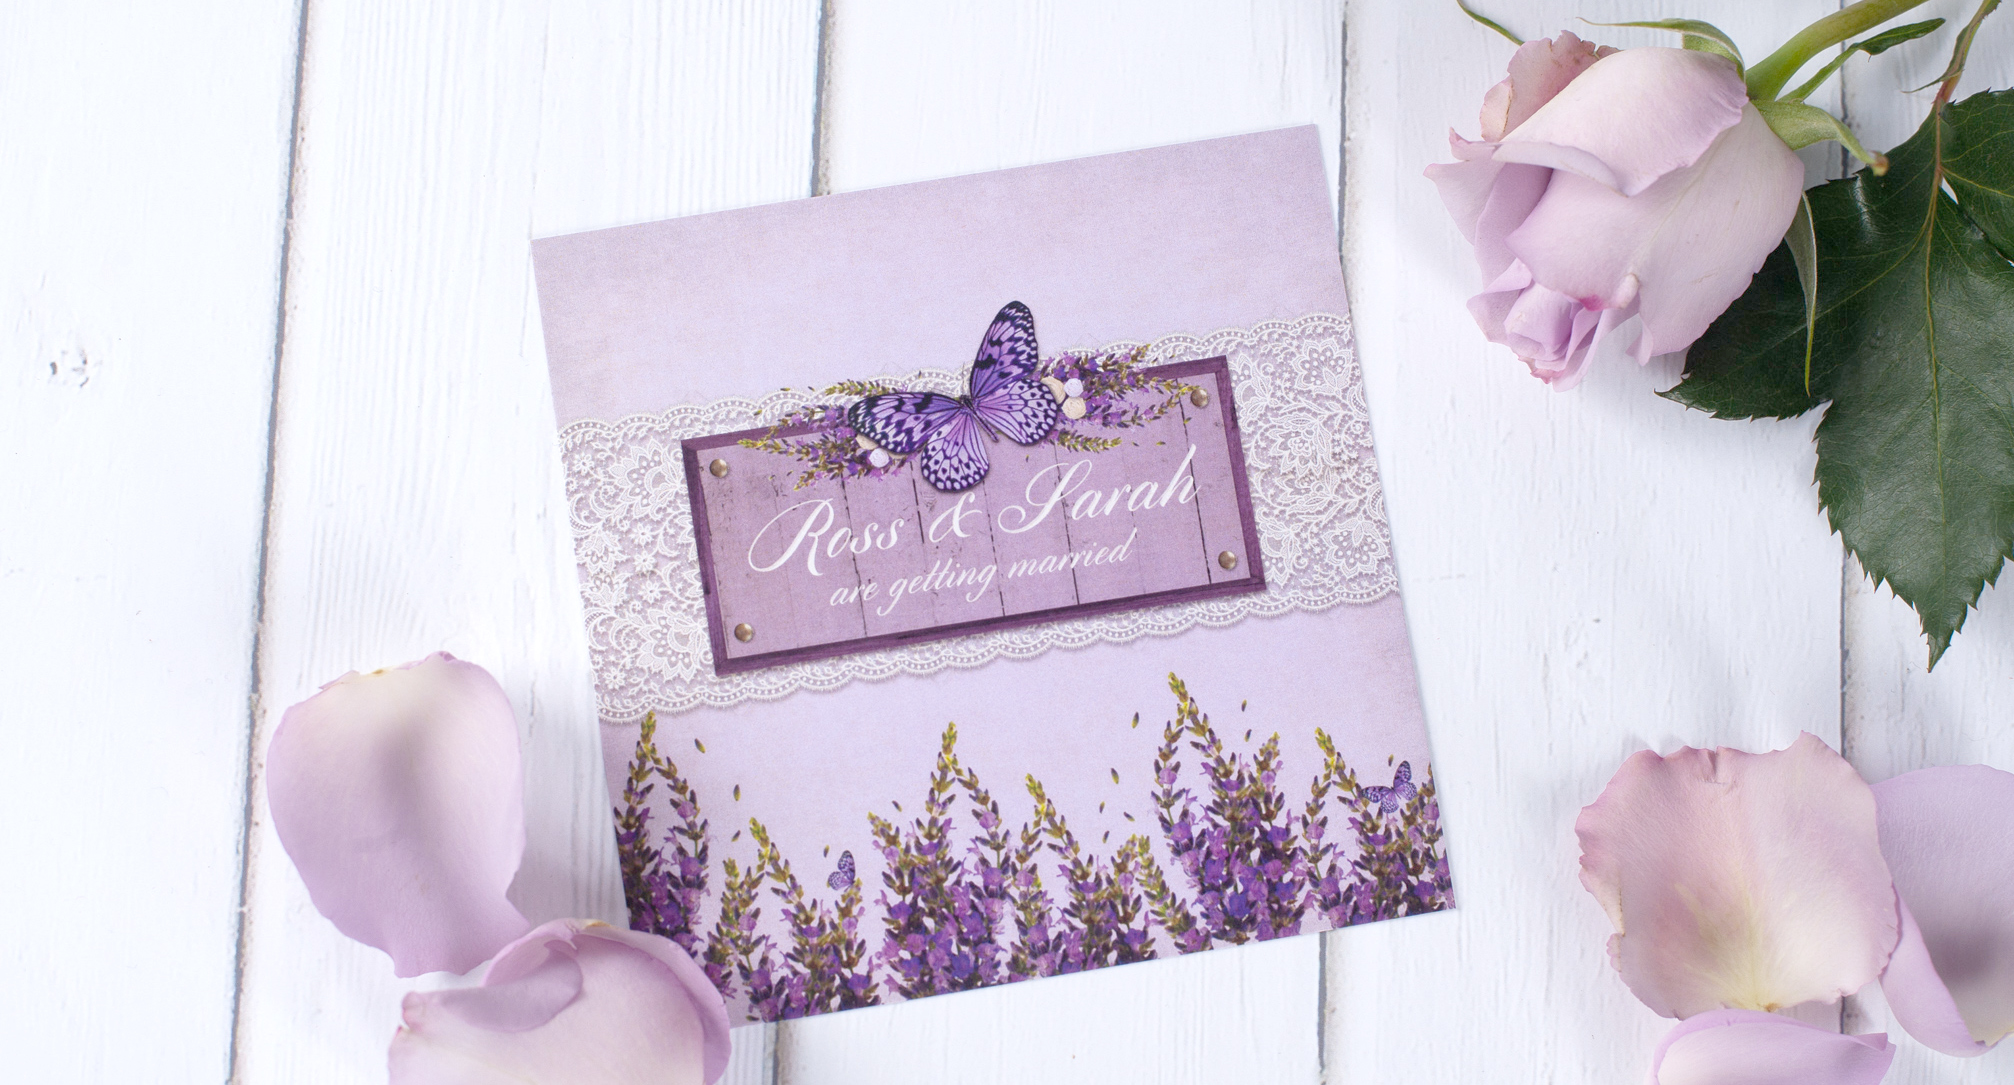 A lavender country garden themed wedding invitation